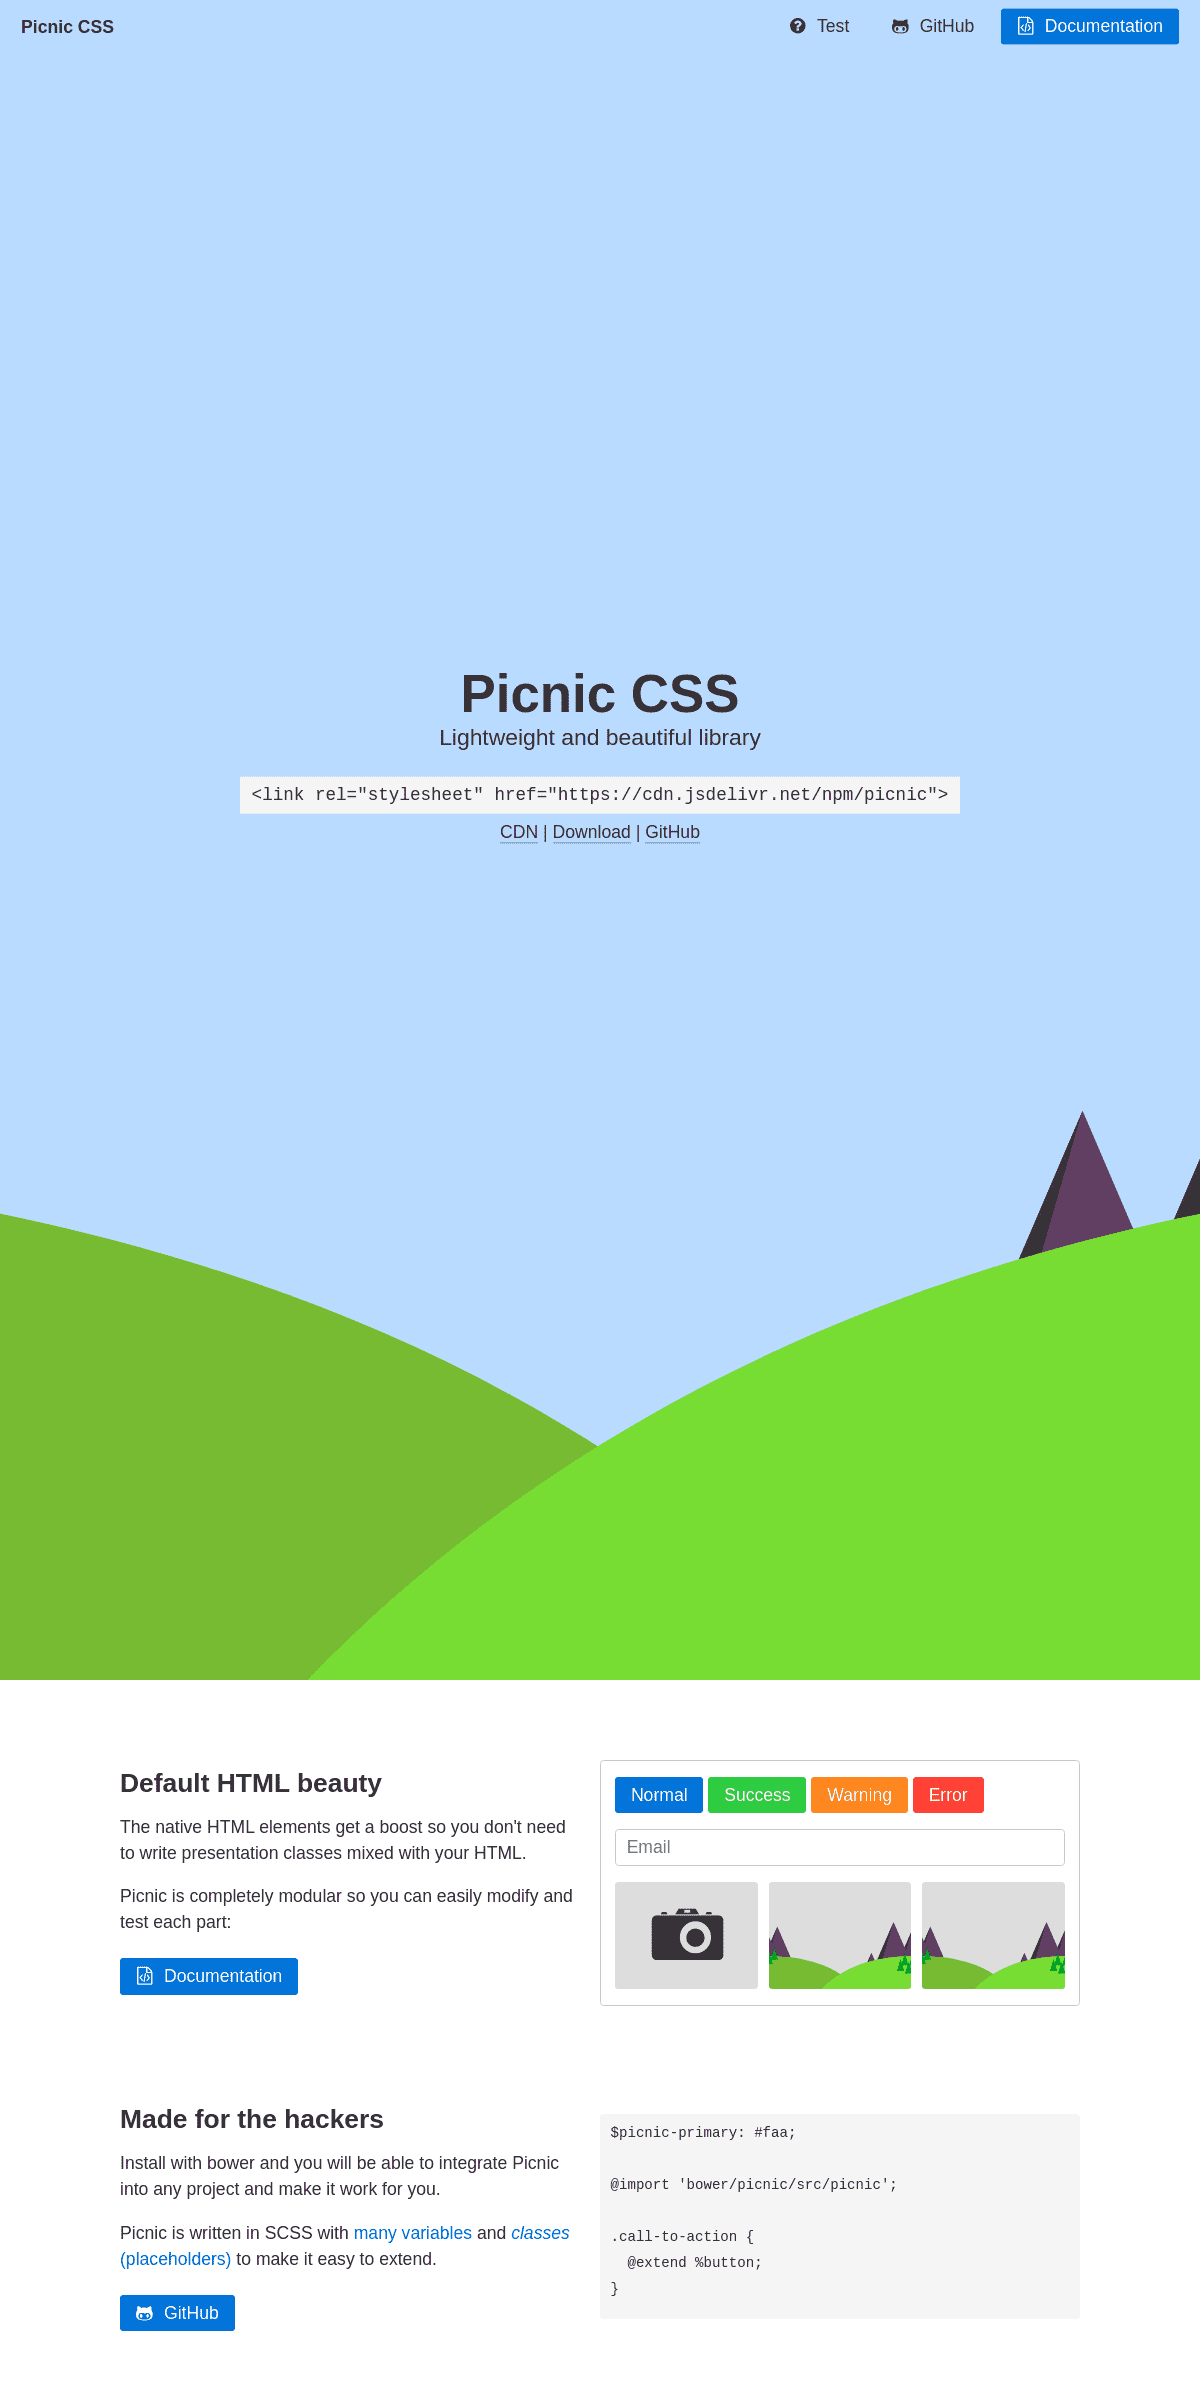 A complete backup of picnicss.com